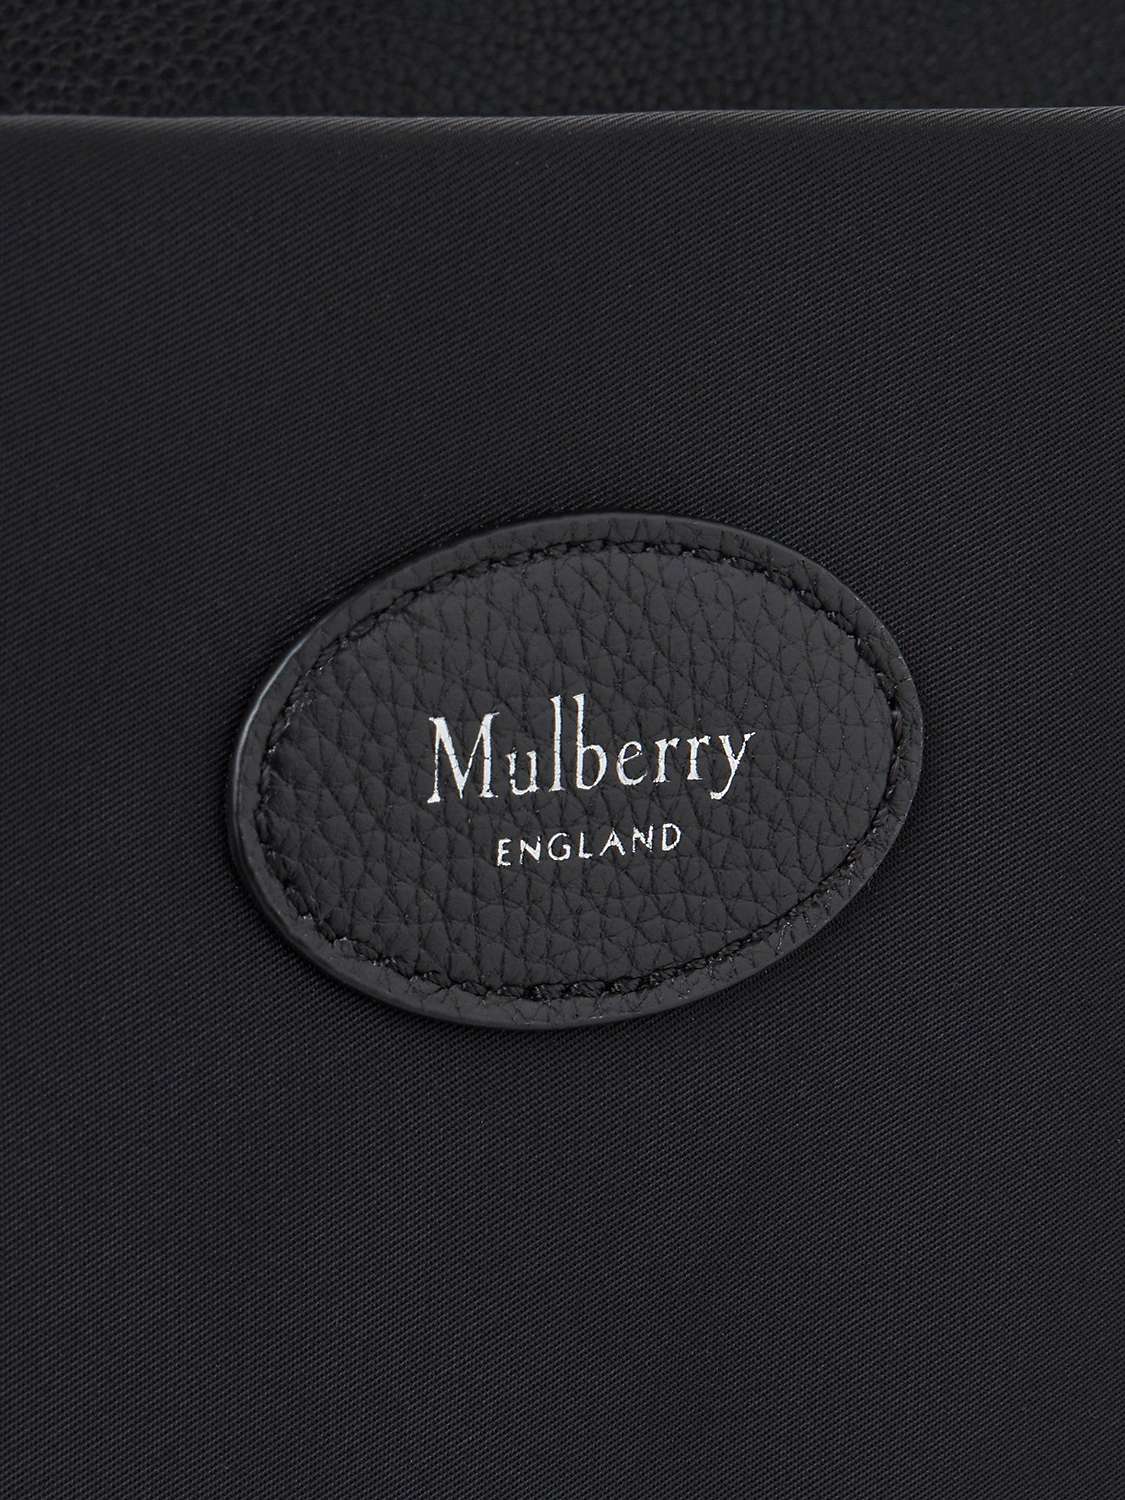 Buy Mulberry Bayswater Nylon Tote Bag, Black Online at johnlewis.com